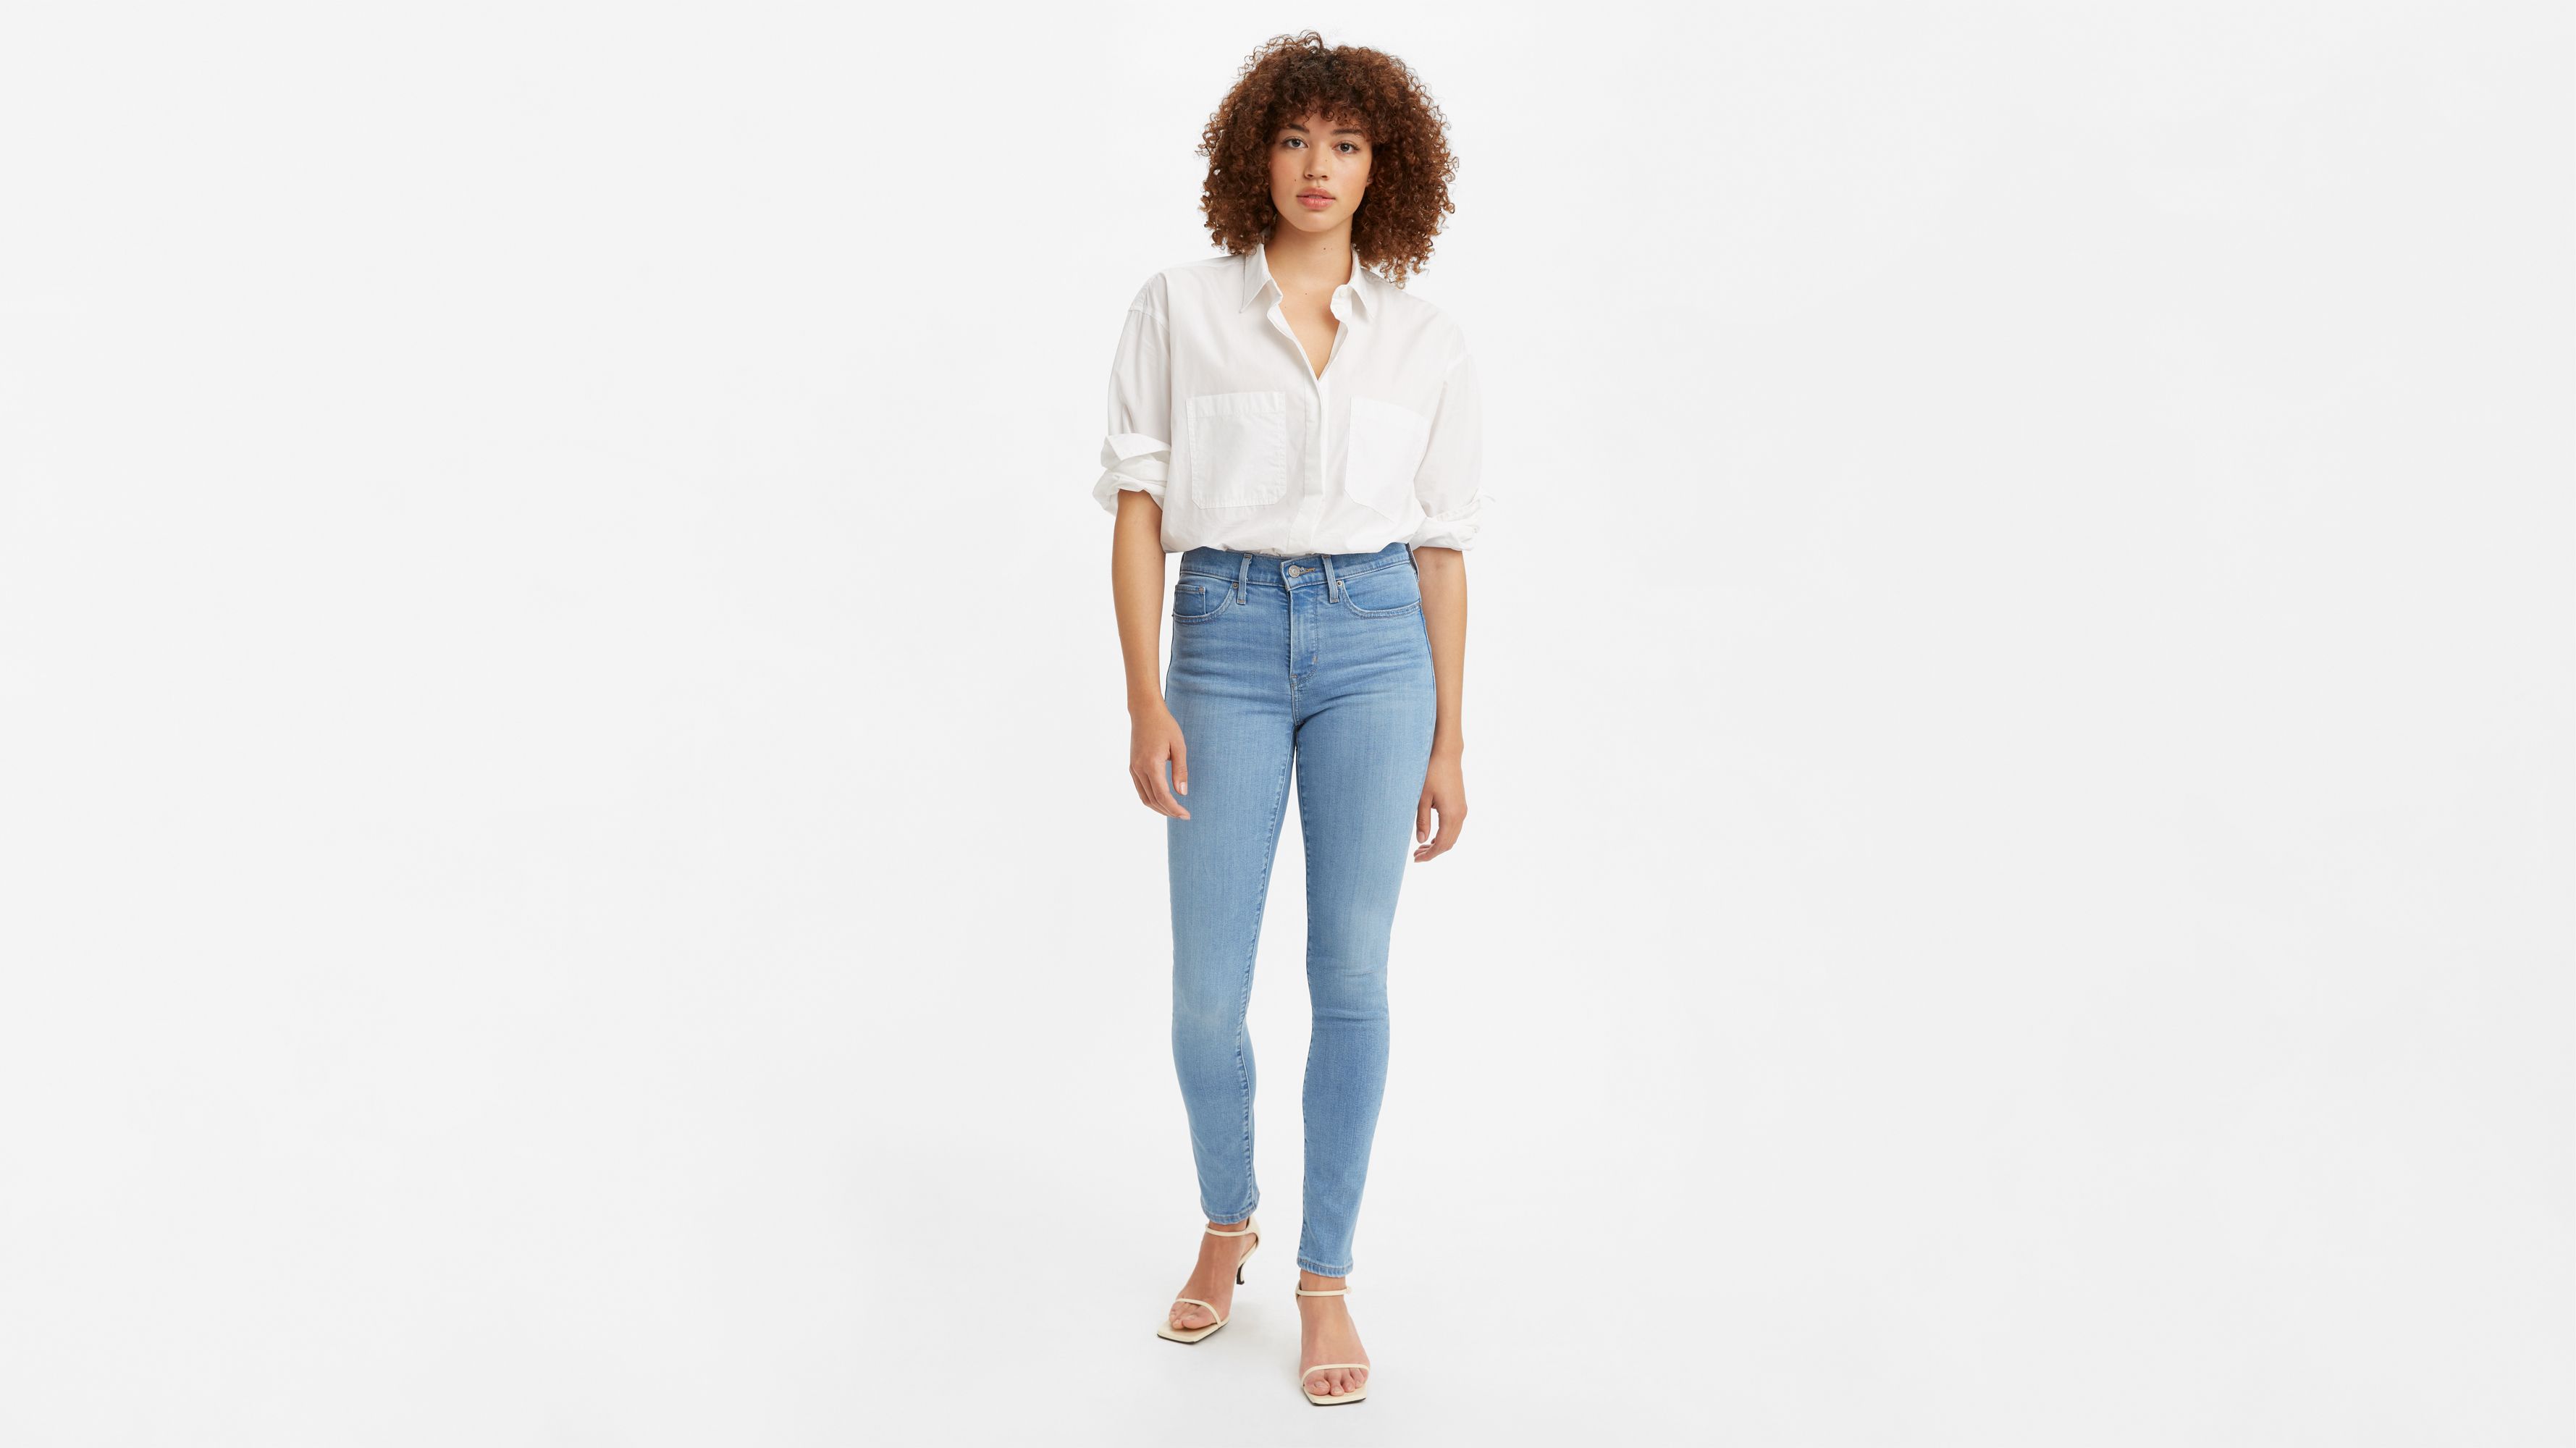 women's 311 shaping skinny jeans